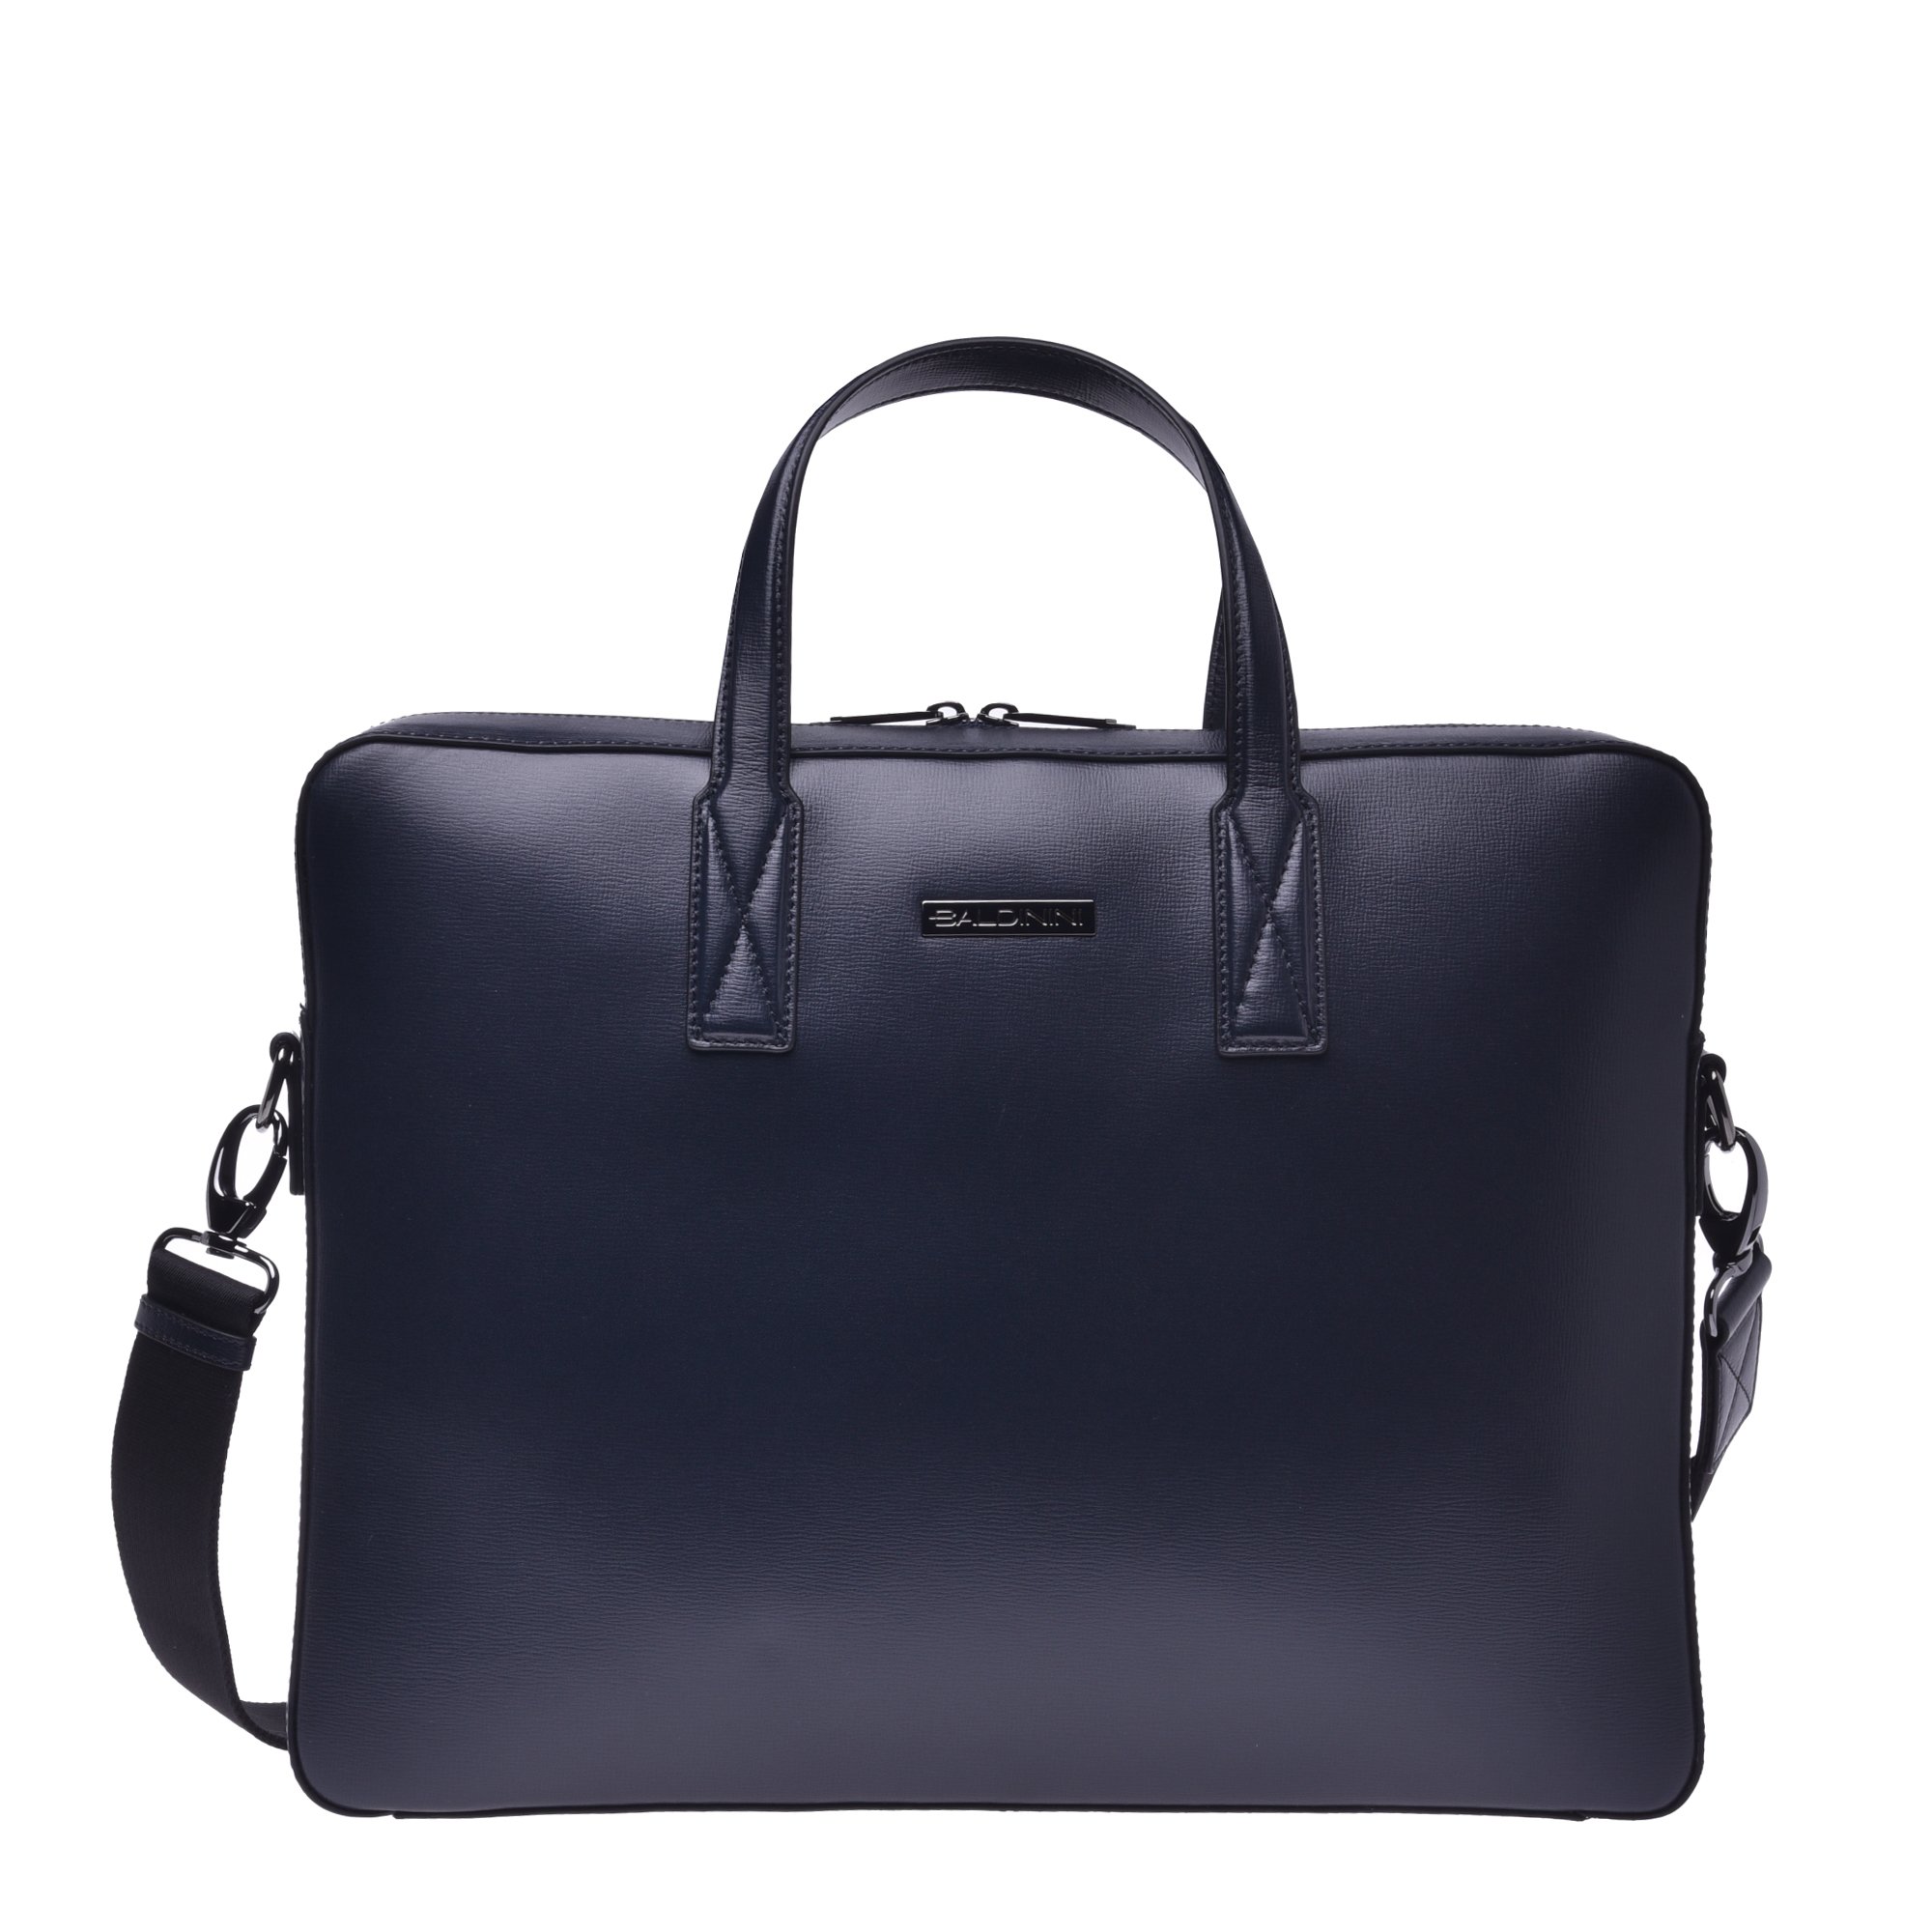 Dark blue leather work bag image